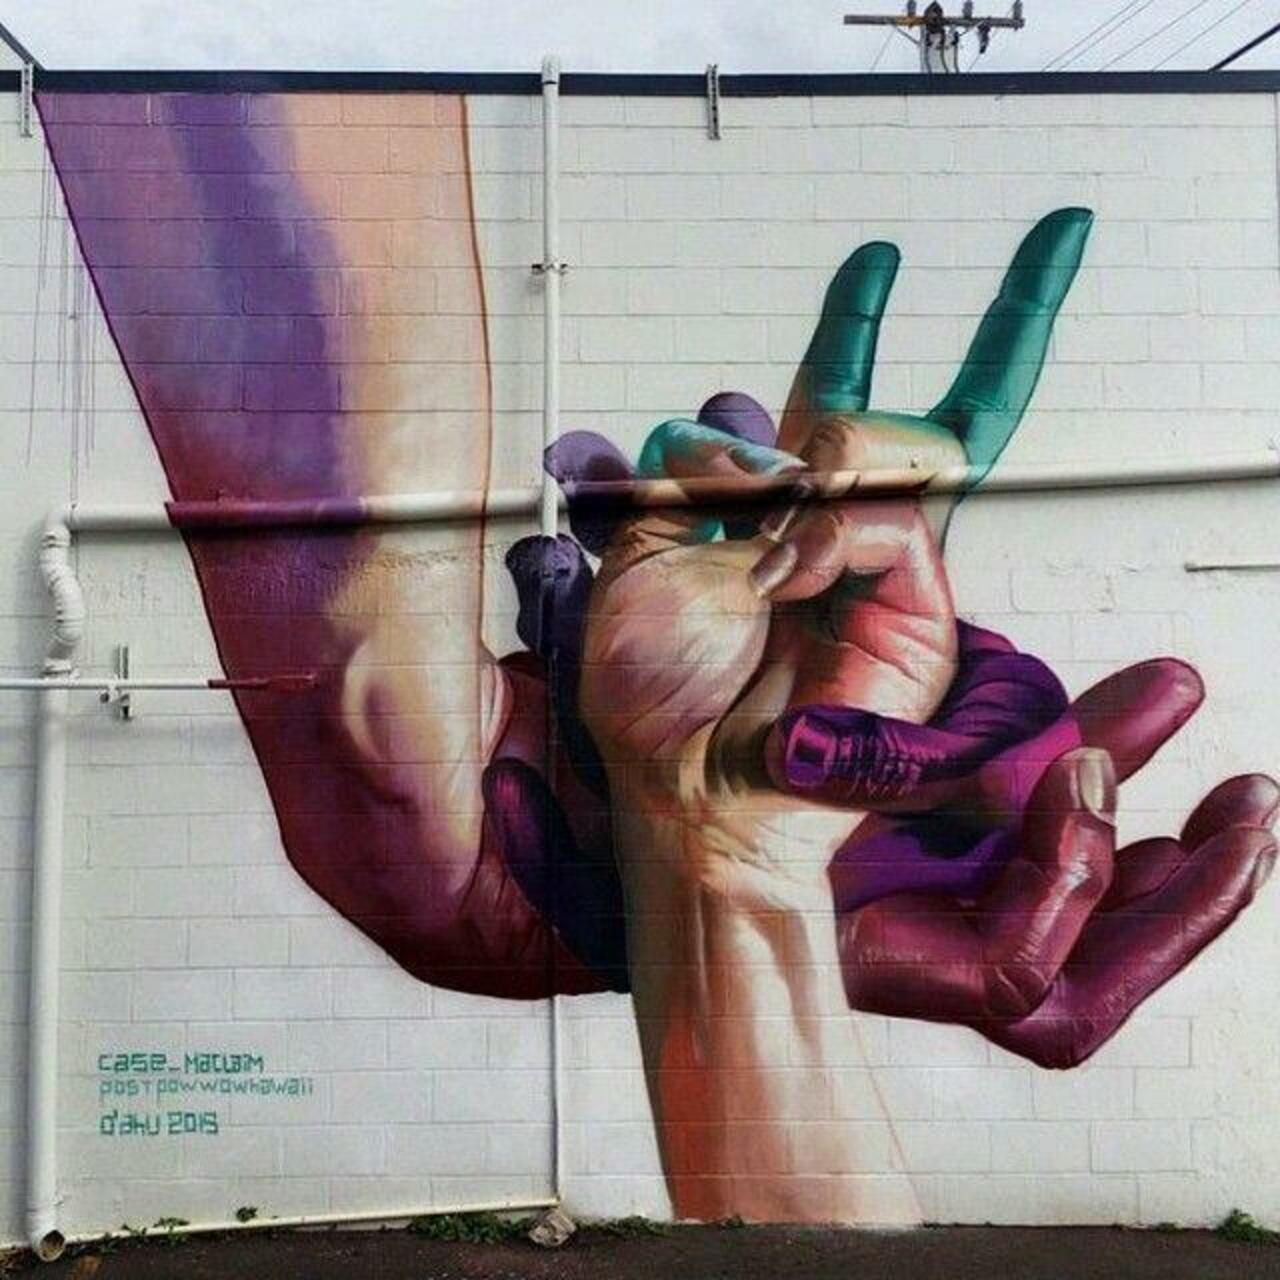 The hand master @case_maclaim strikes #Oahu in #Hawaii #urbanart #streetart #mural #graffiti #art #powwowhawaii http://t.co/UR9LXYDATz